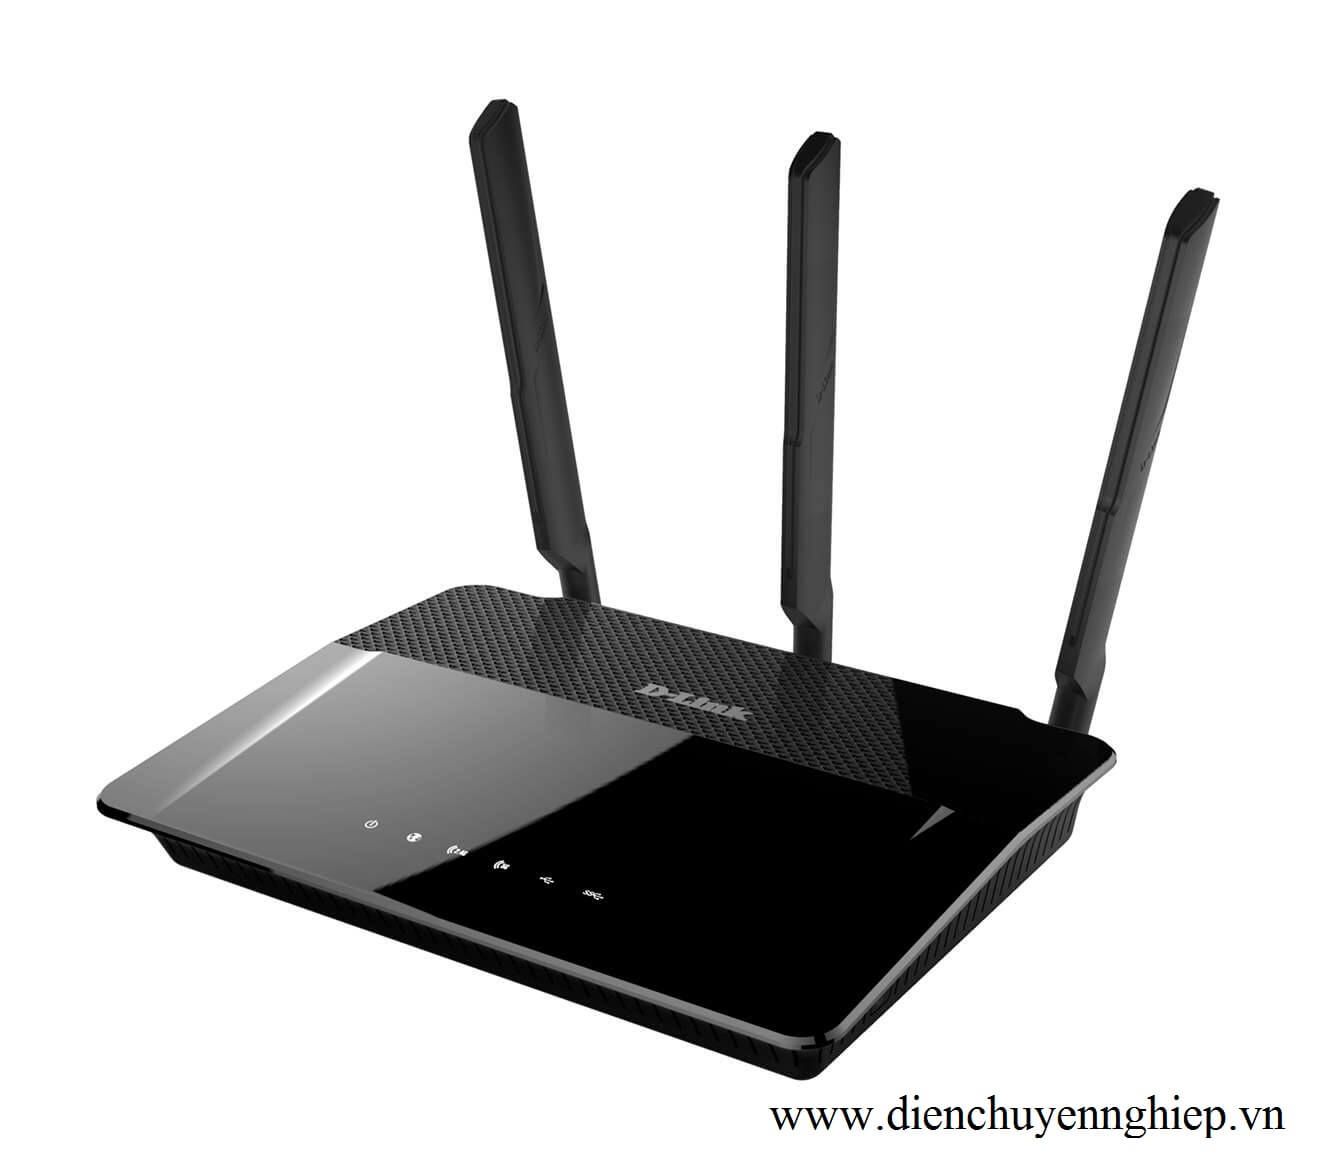 Bộ phát wifi D-Link DIR-880L Wireless AC1900Mbps